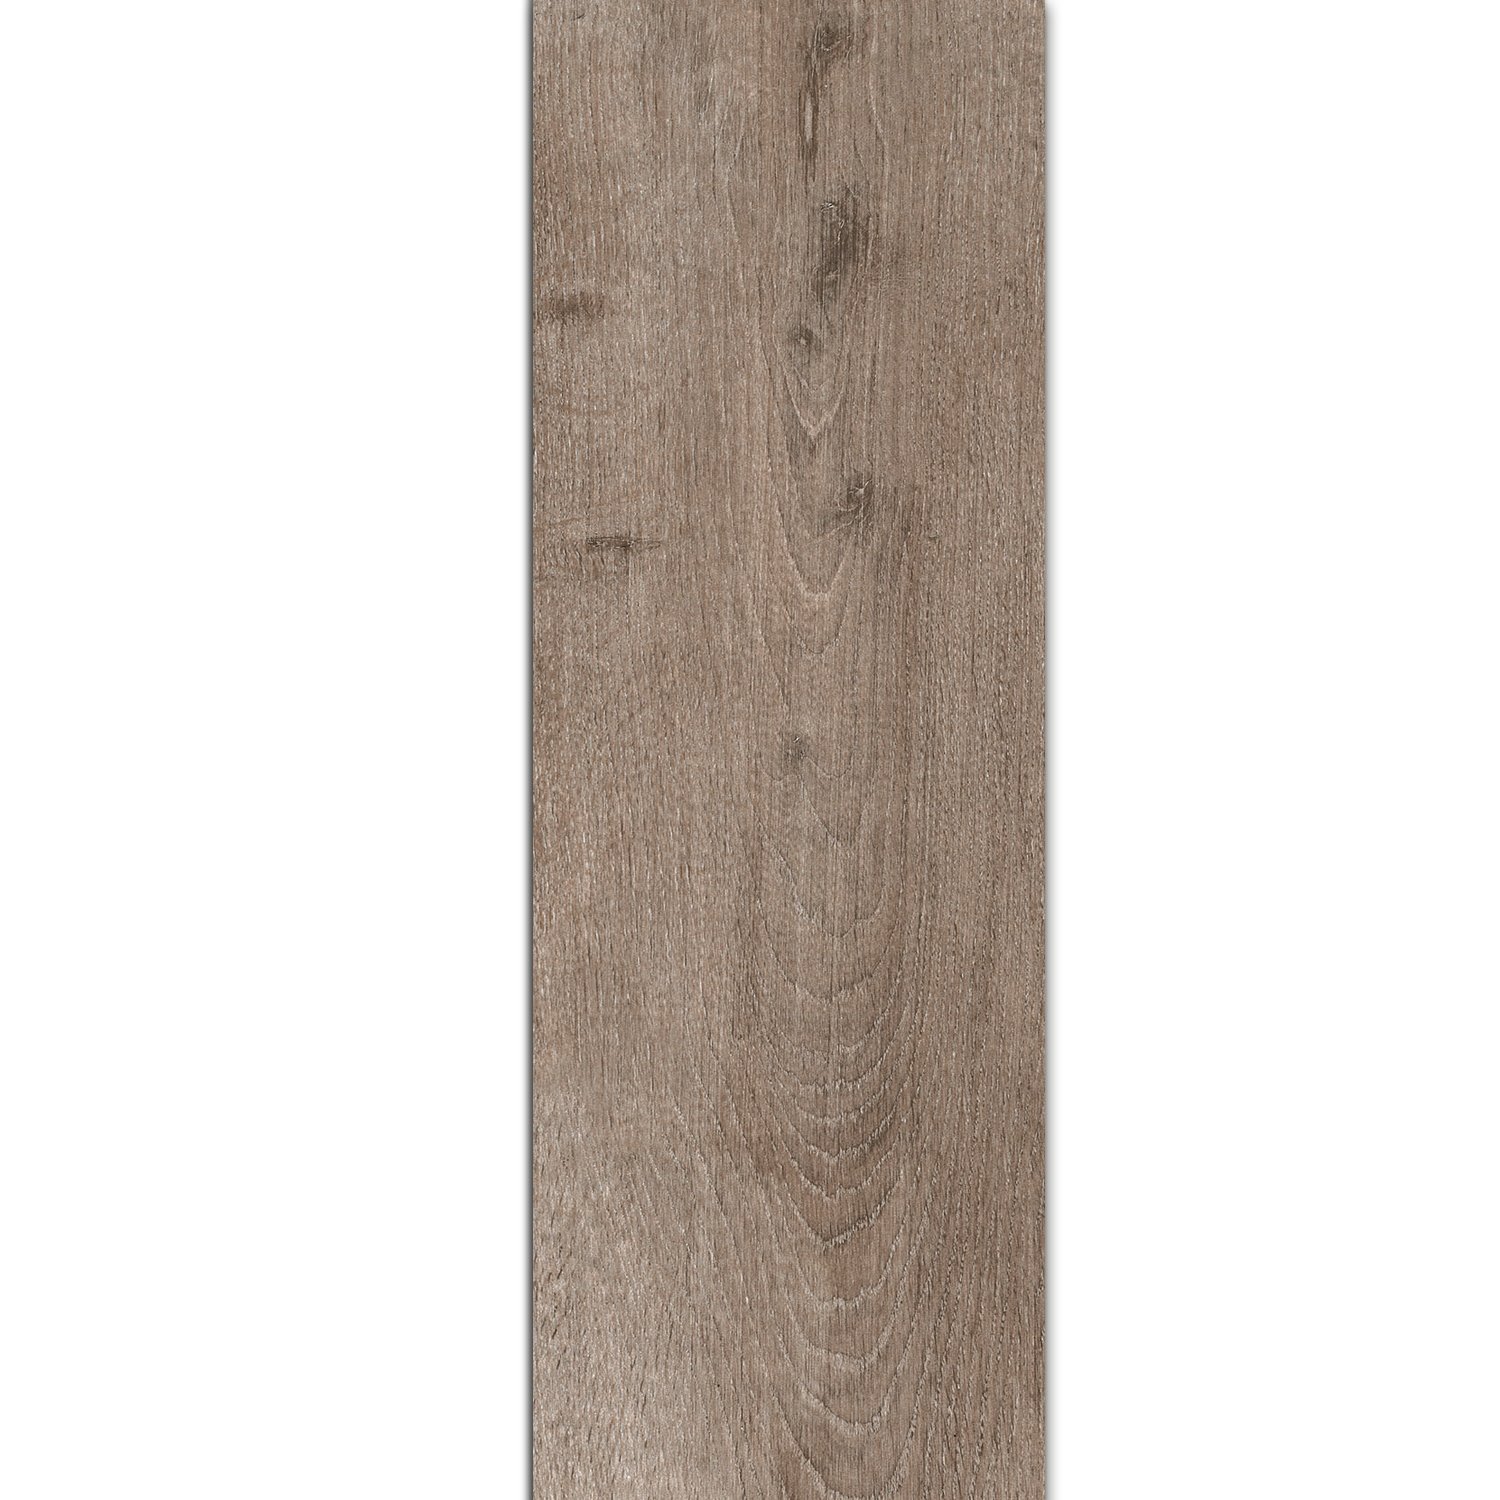 Bodenfliese Holz Optik Riverside Braun 20x120cm